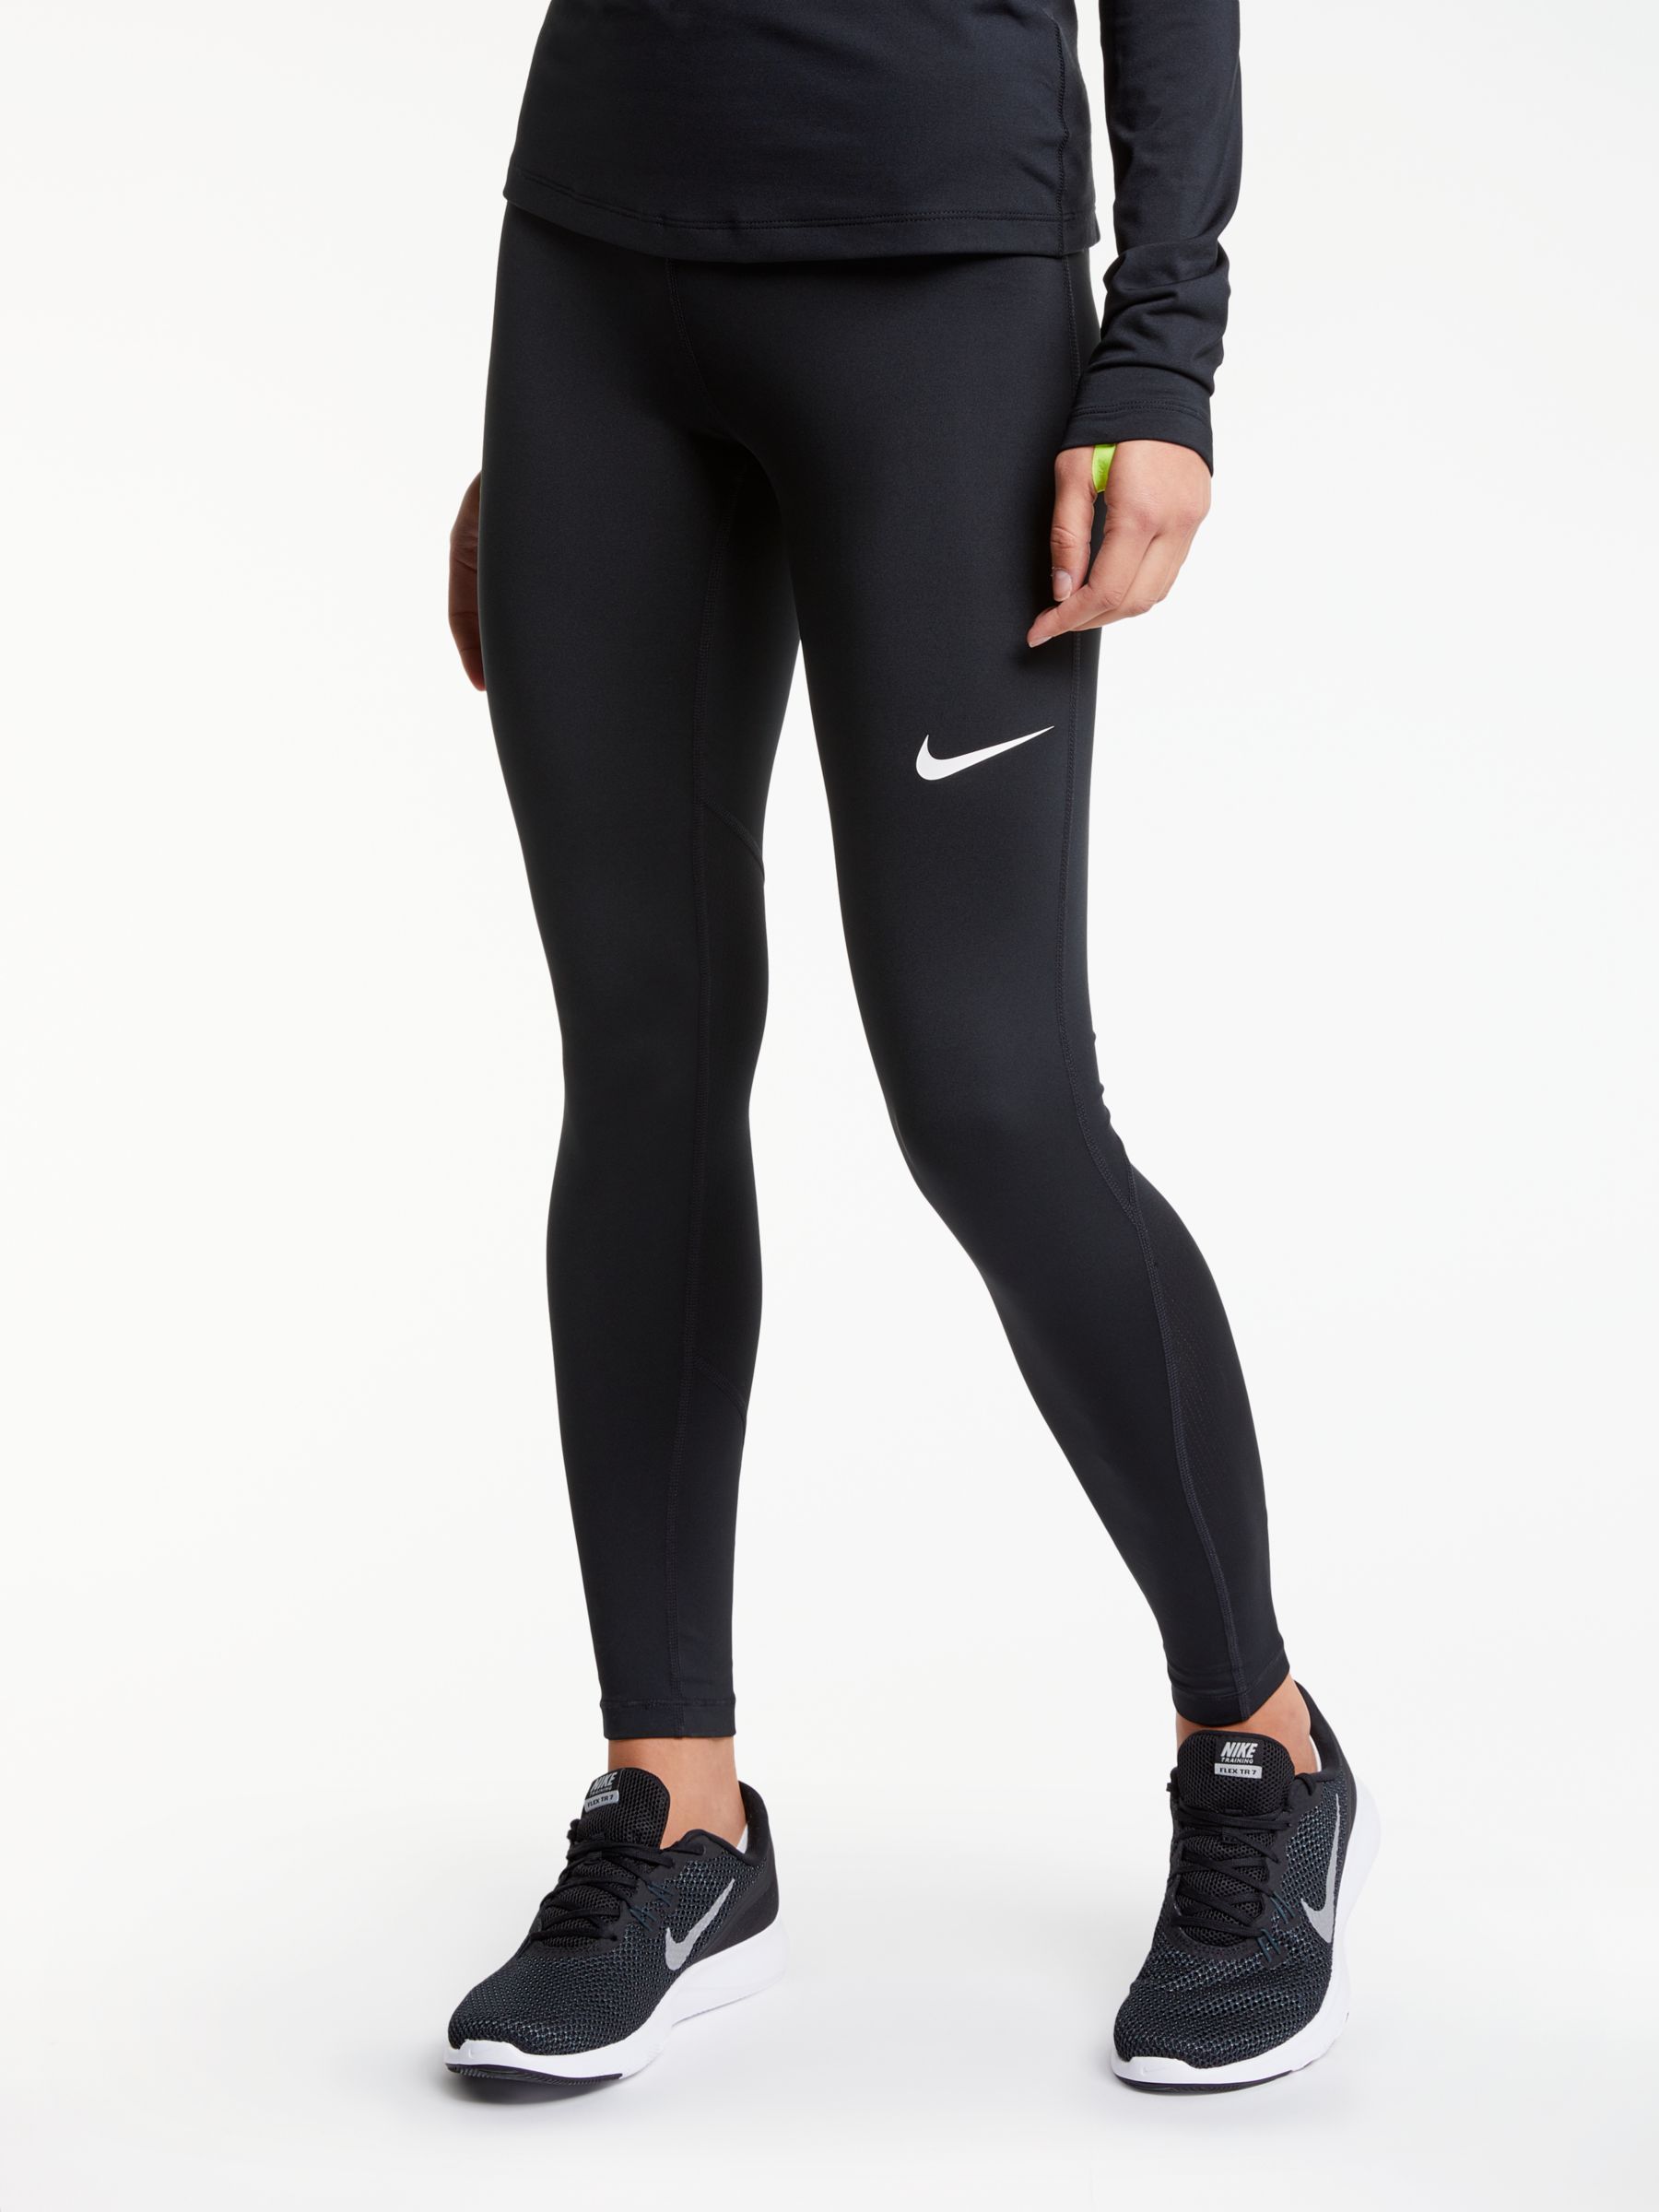 Nike Pro Training Tights, Black/White, XS